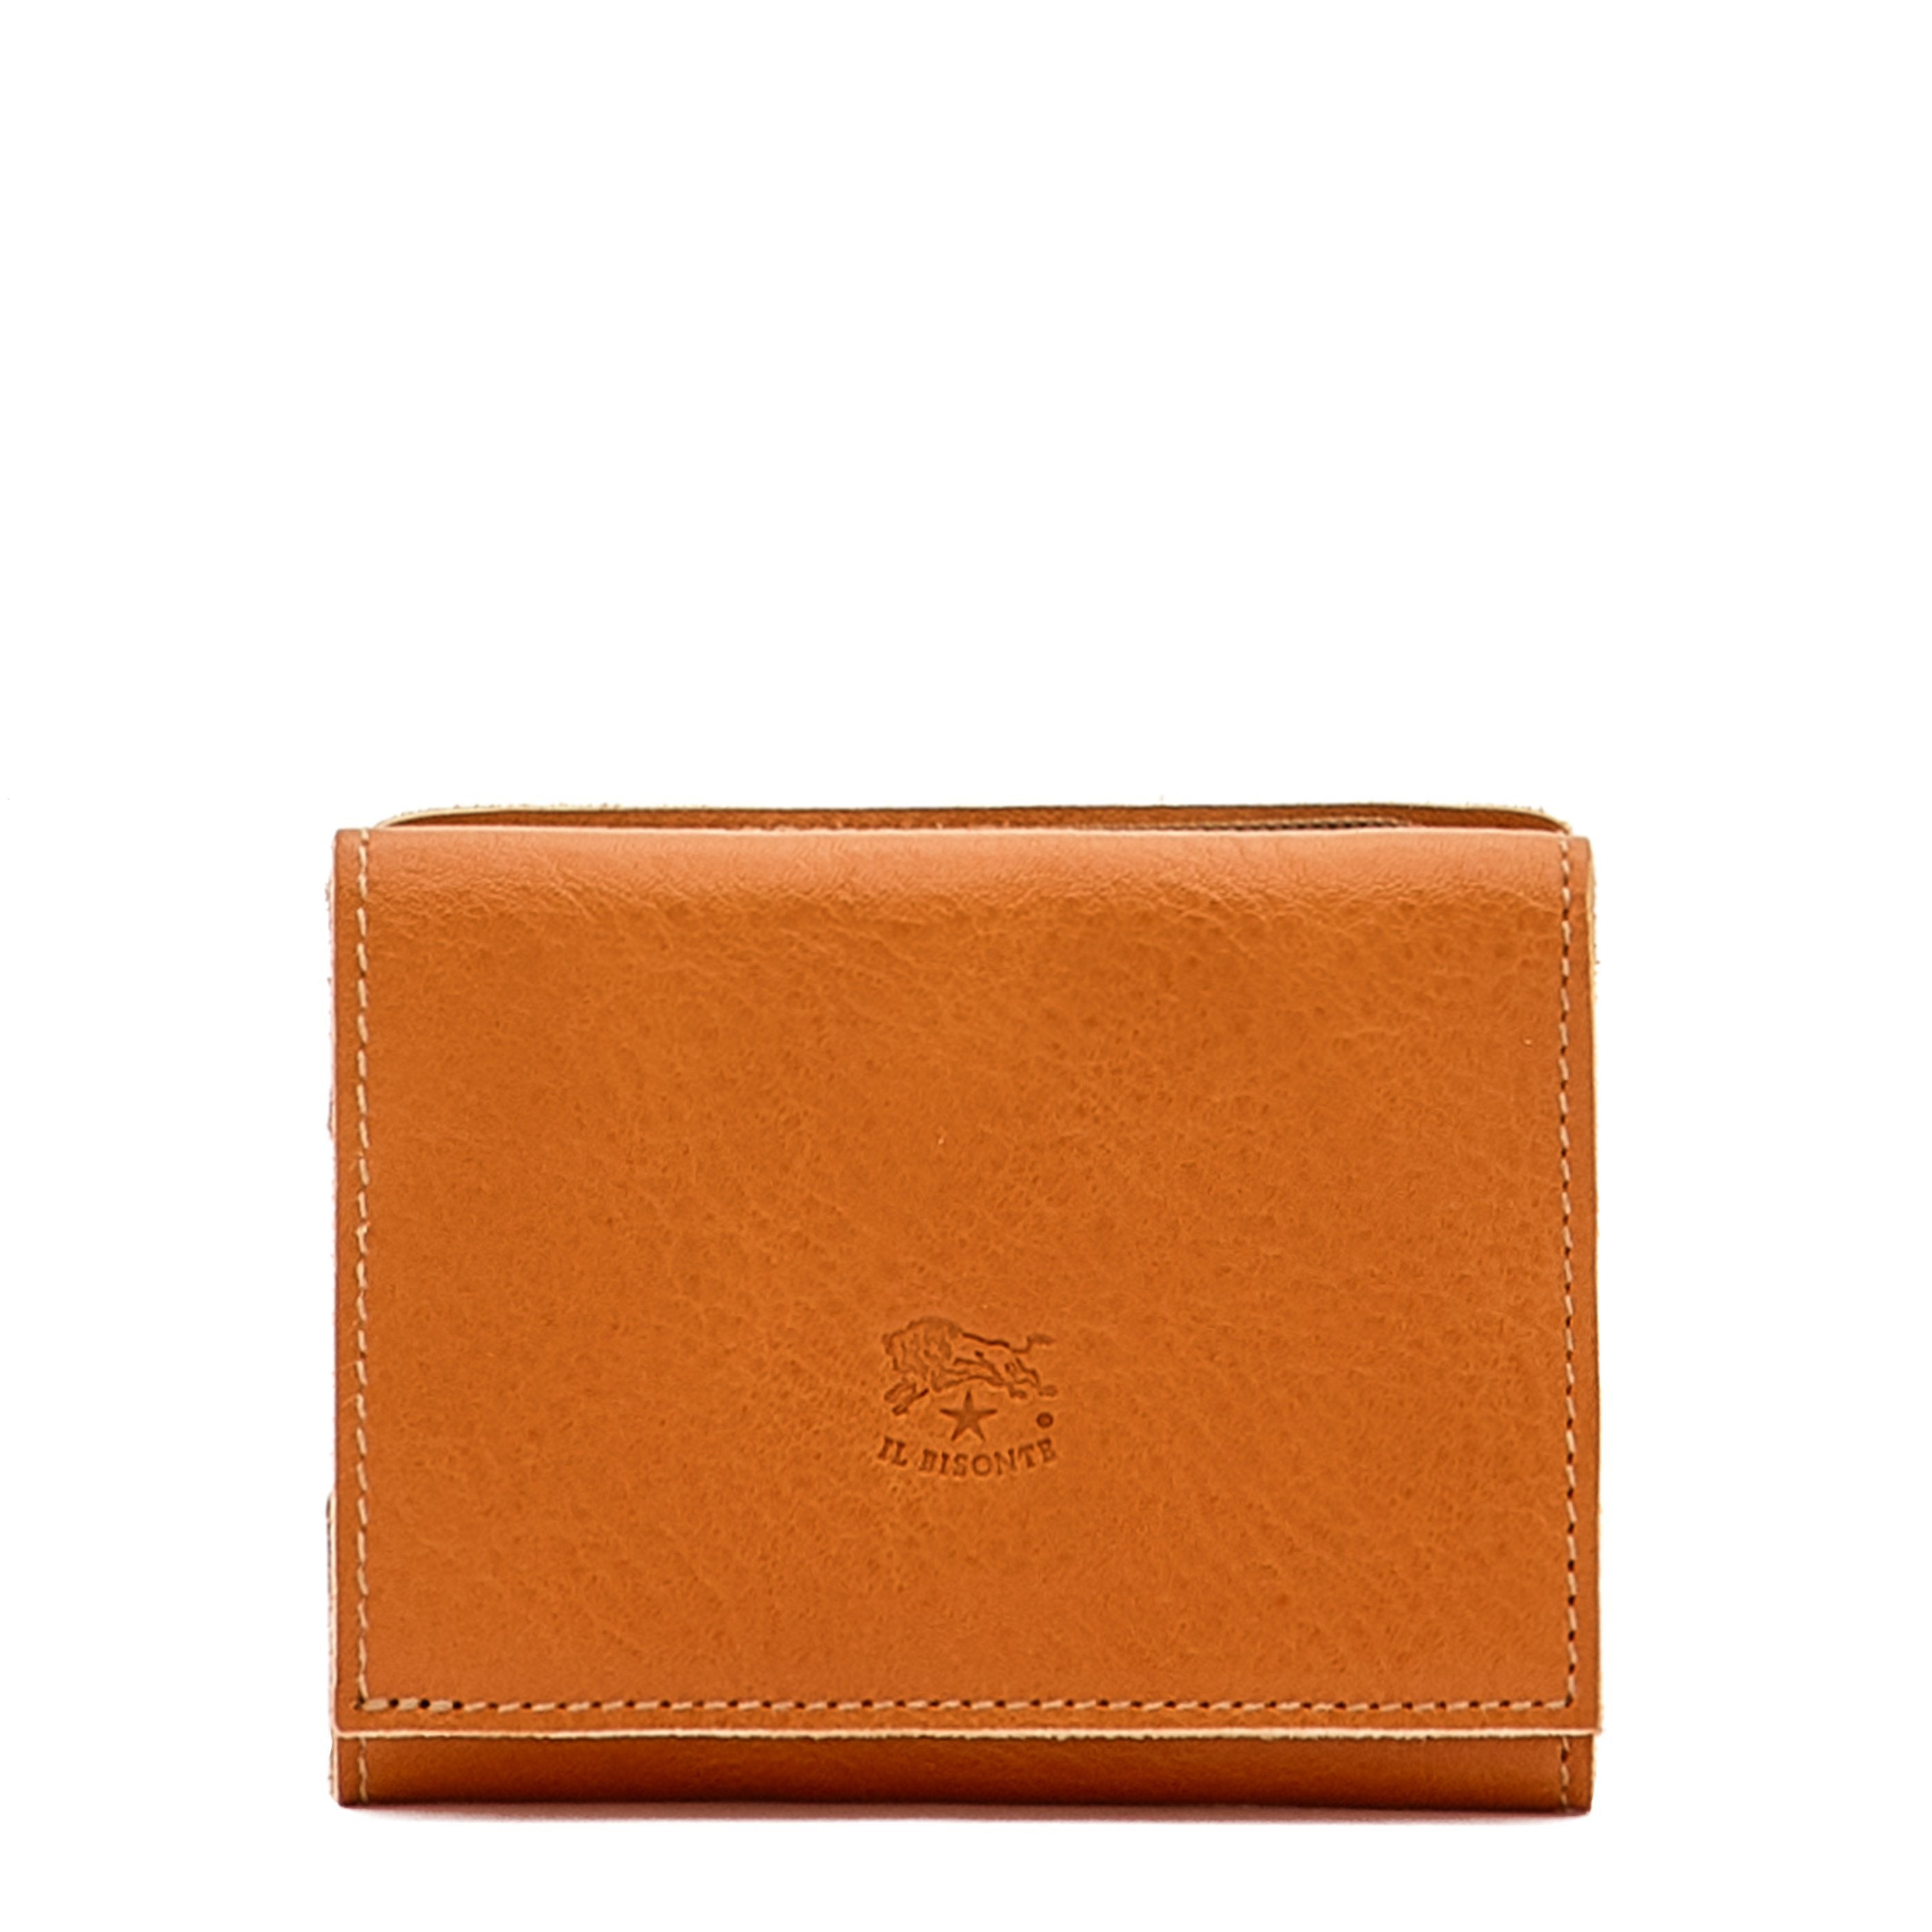 UNISEX - Genuine leather wallet